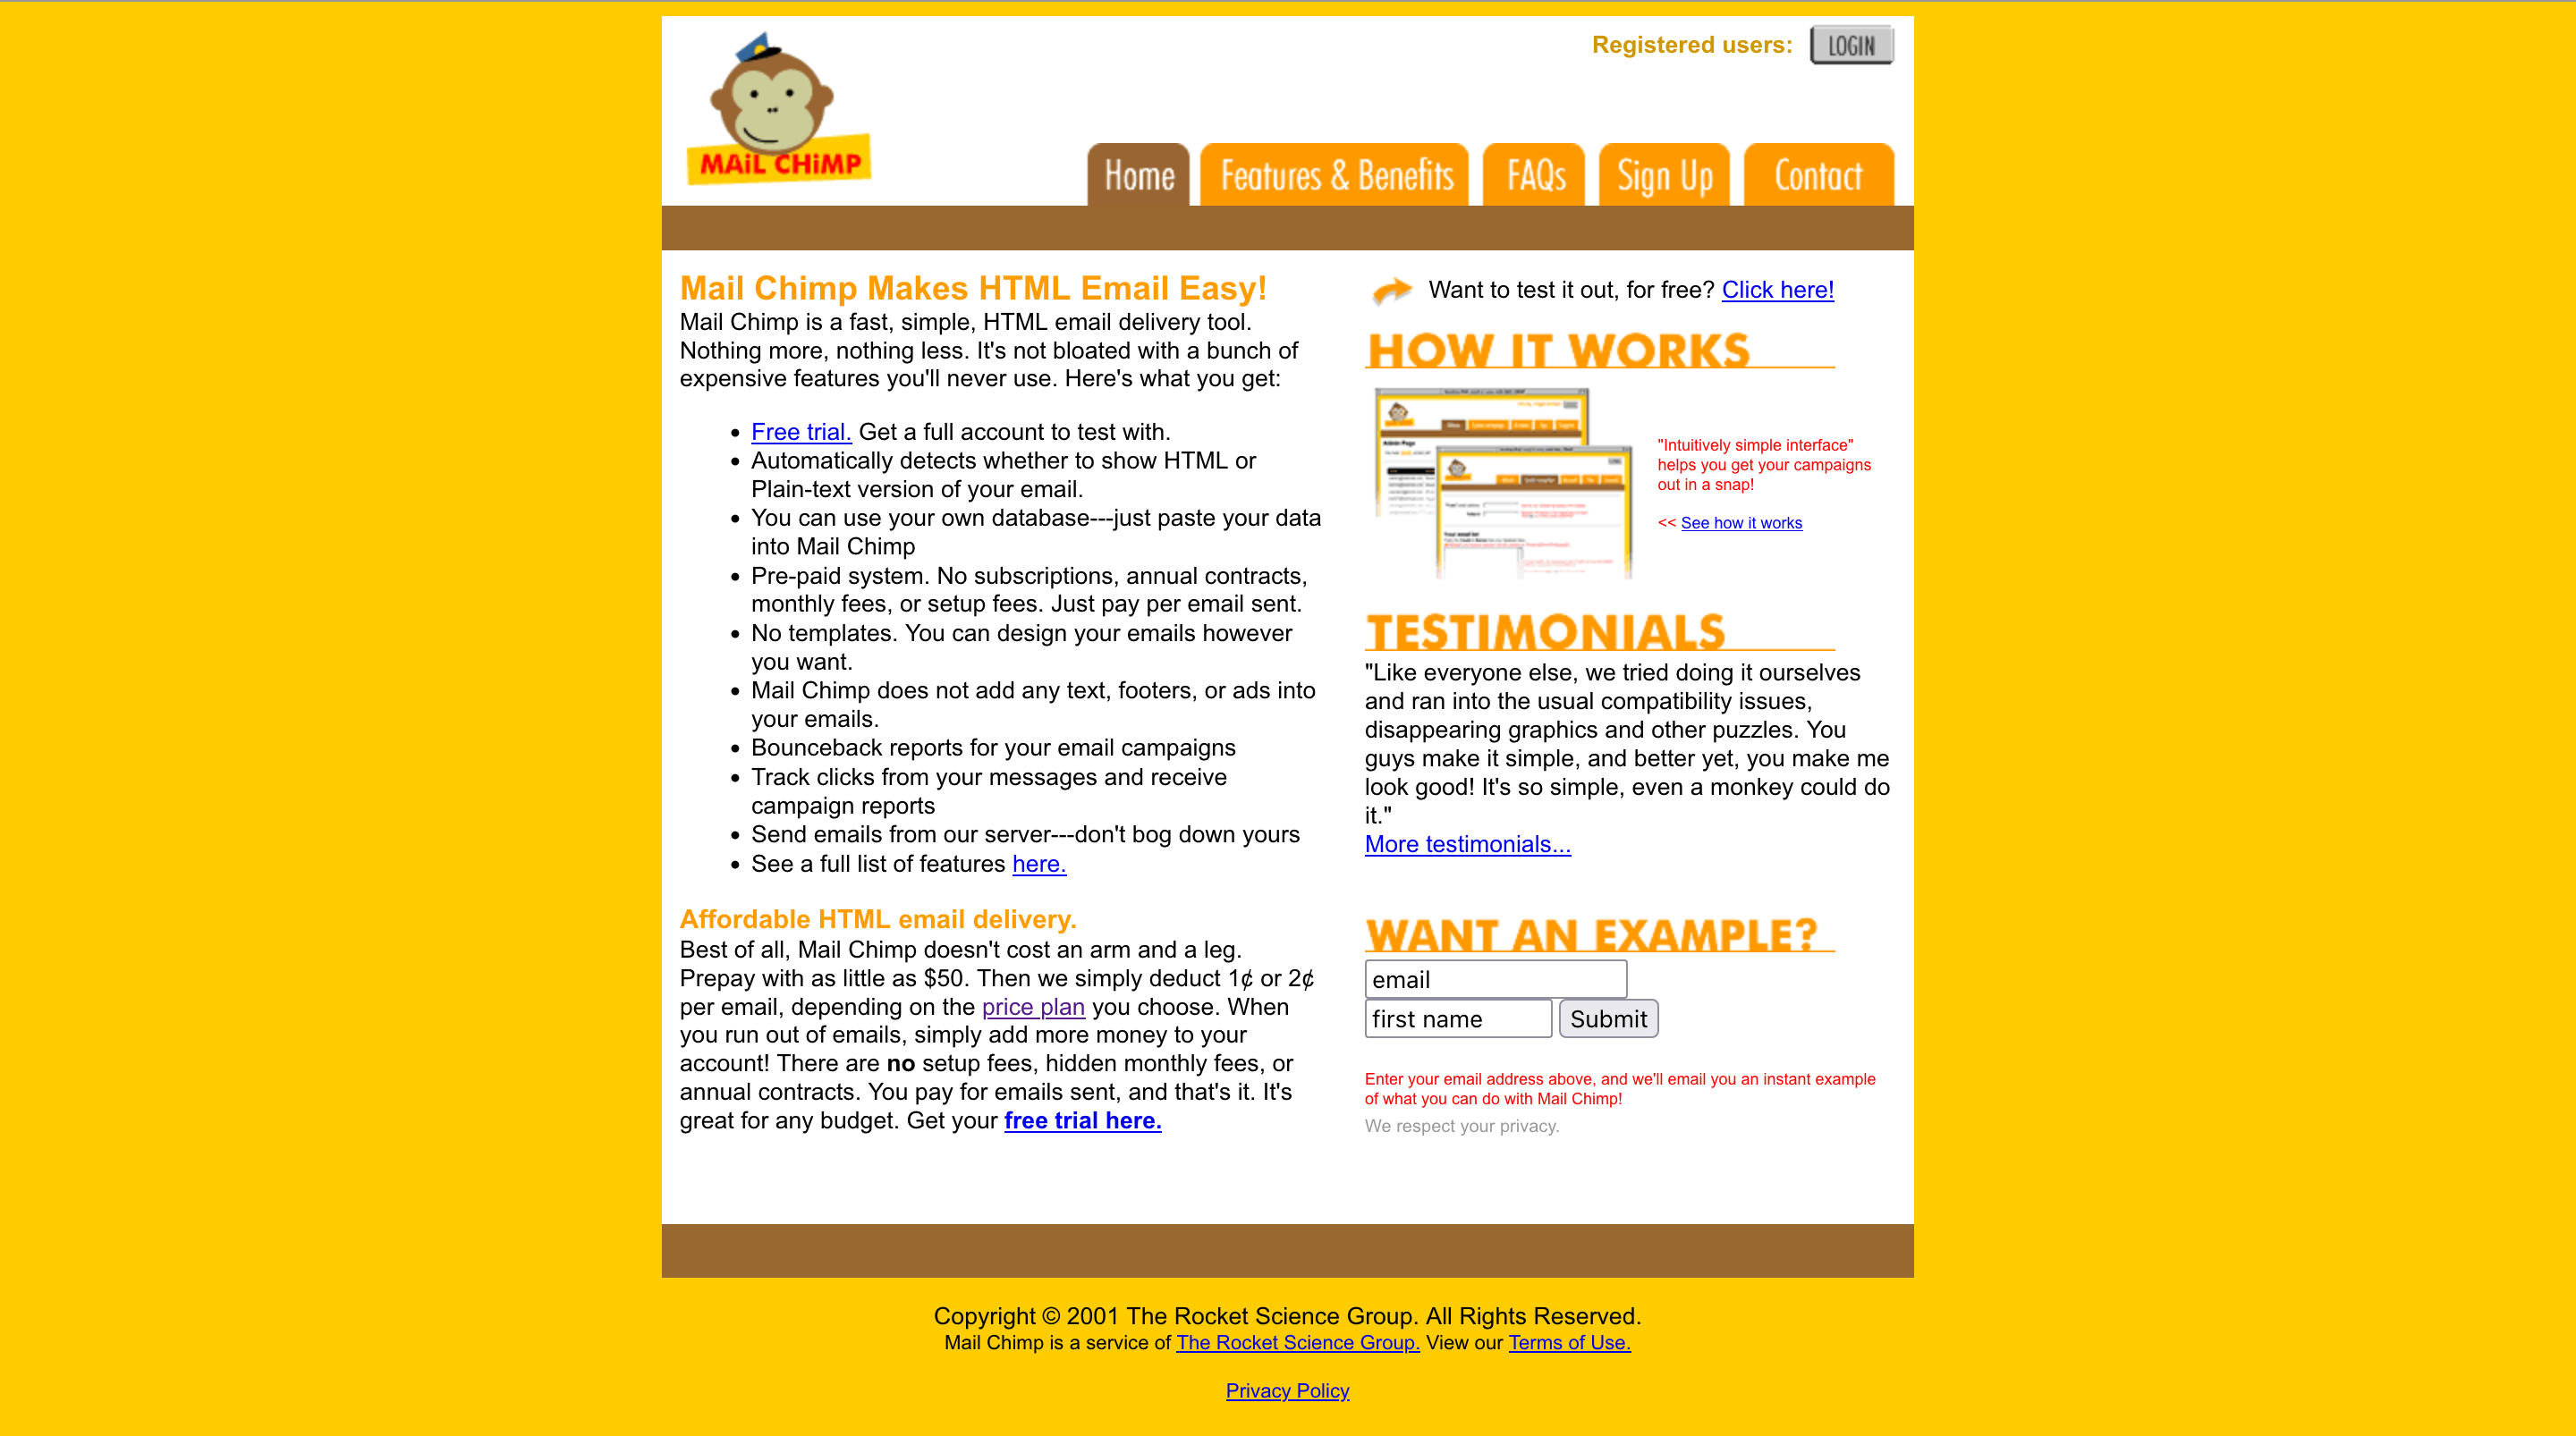 Mailchimp’s website in 2001